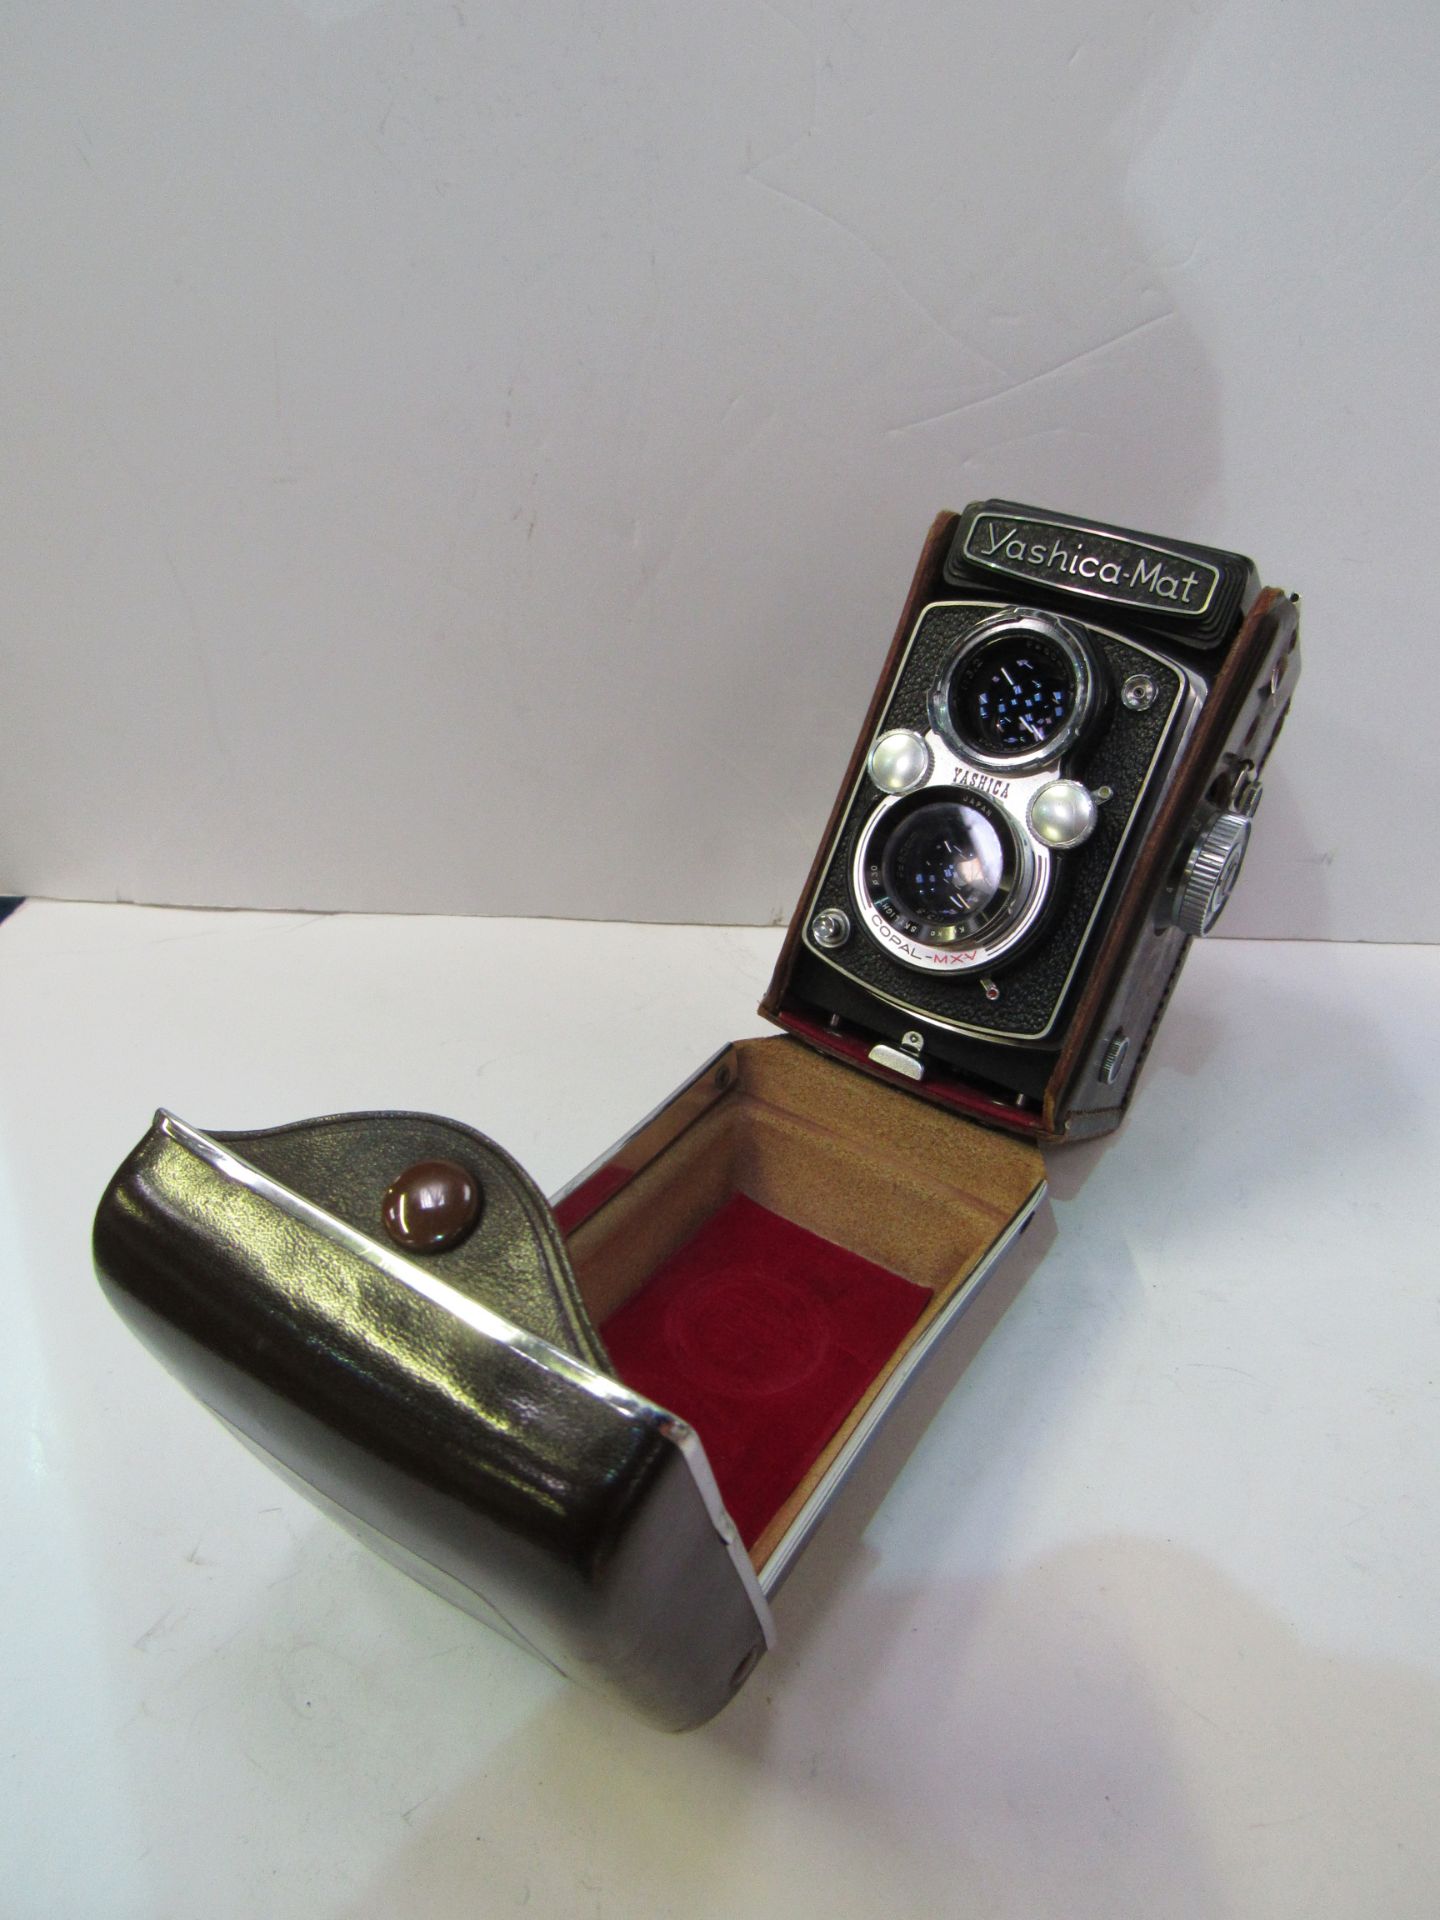 Yashica-Mat Copal-MXV cine camera. Estimate £40-60. - Image 2 of 5